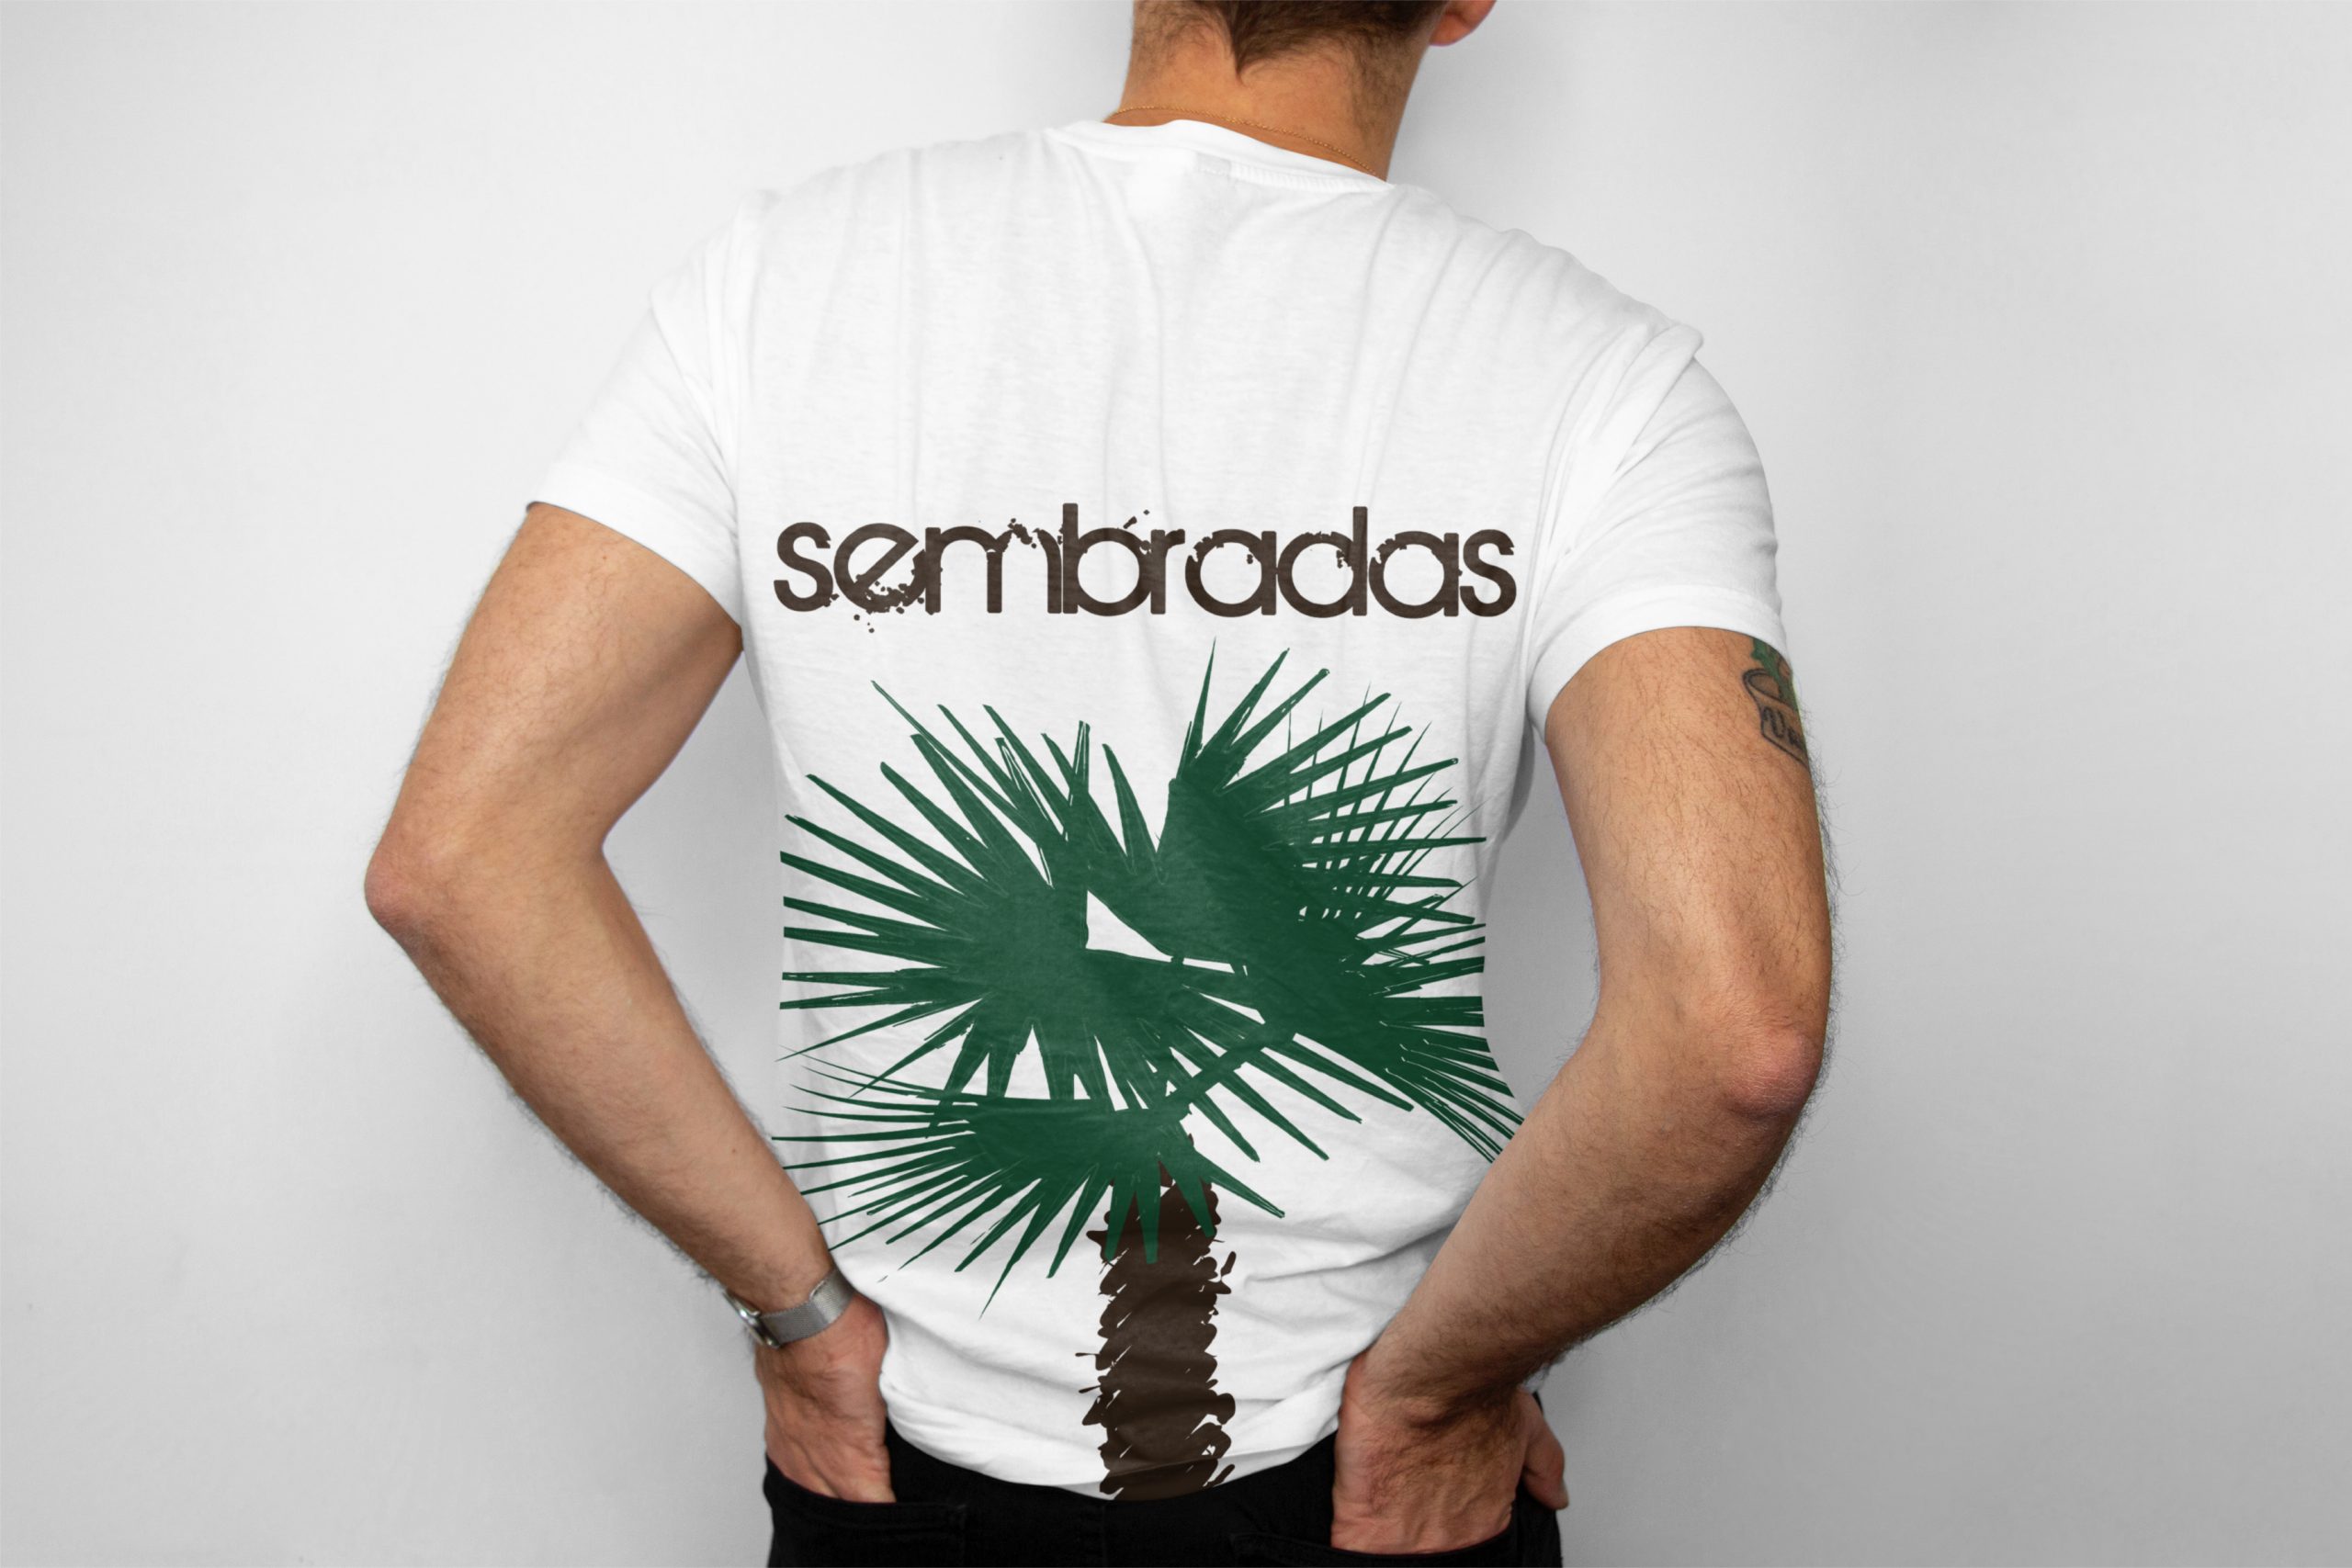 Camisetas logo empresa, Sembradas, by DSMK